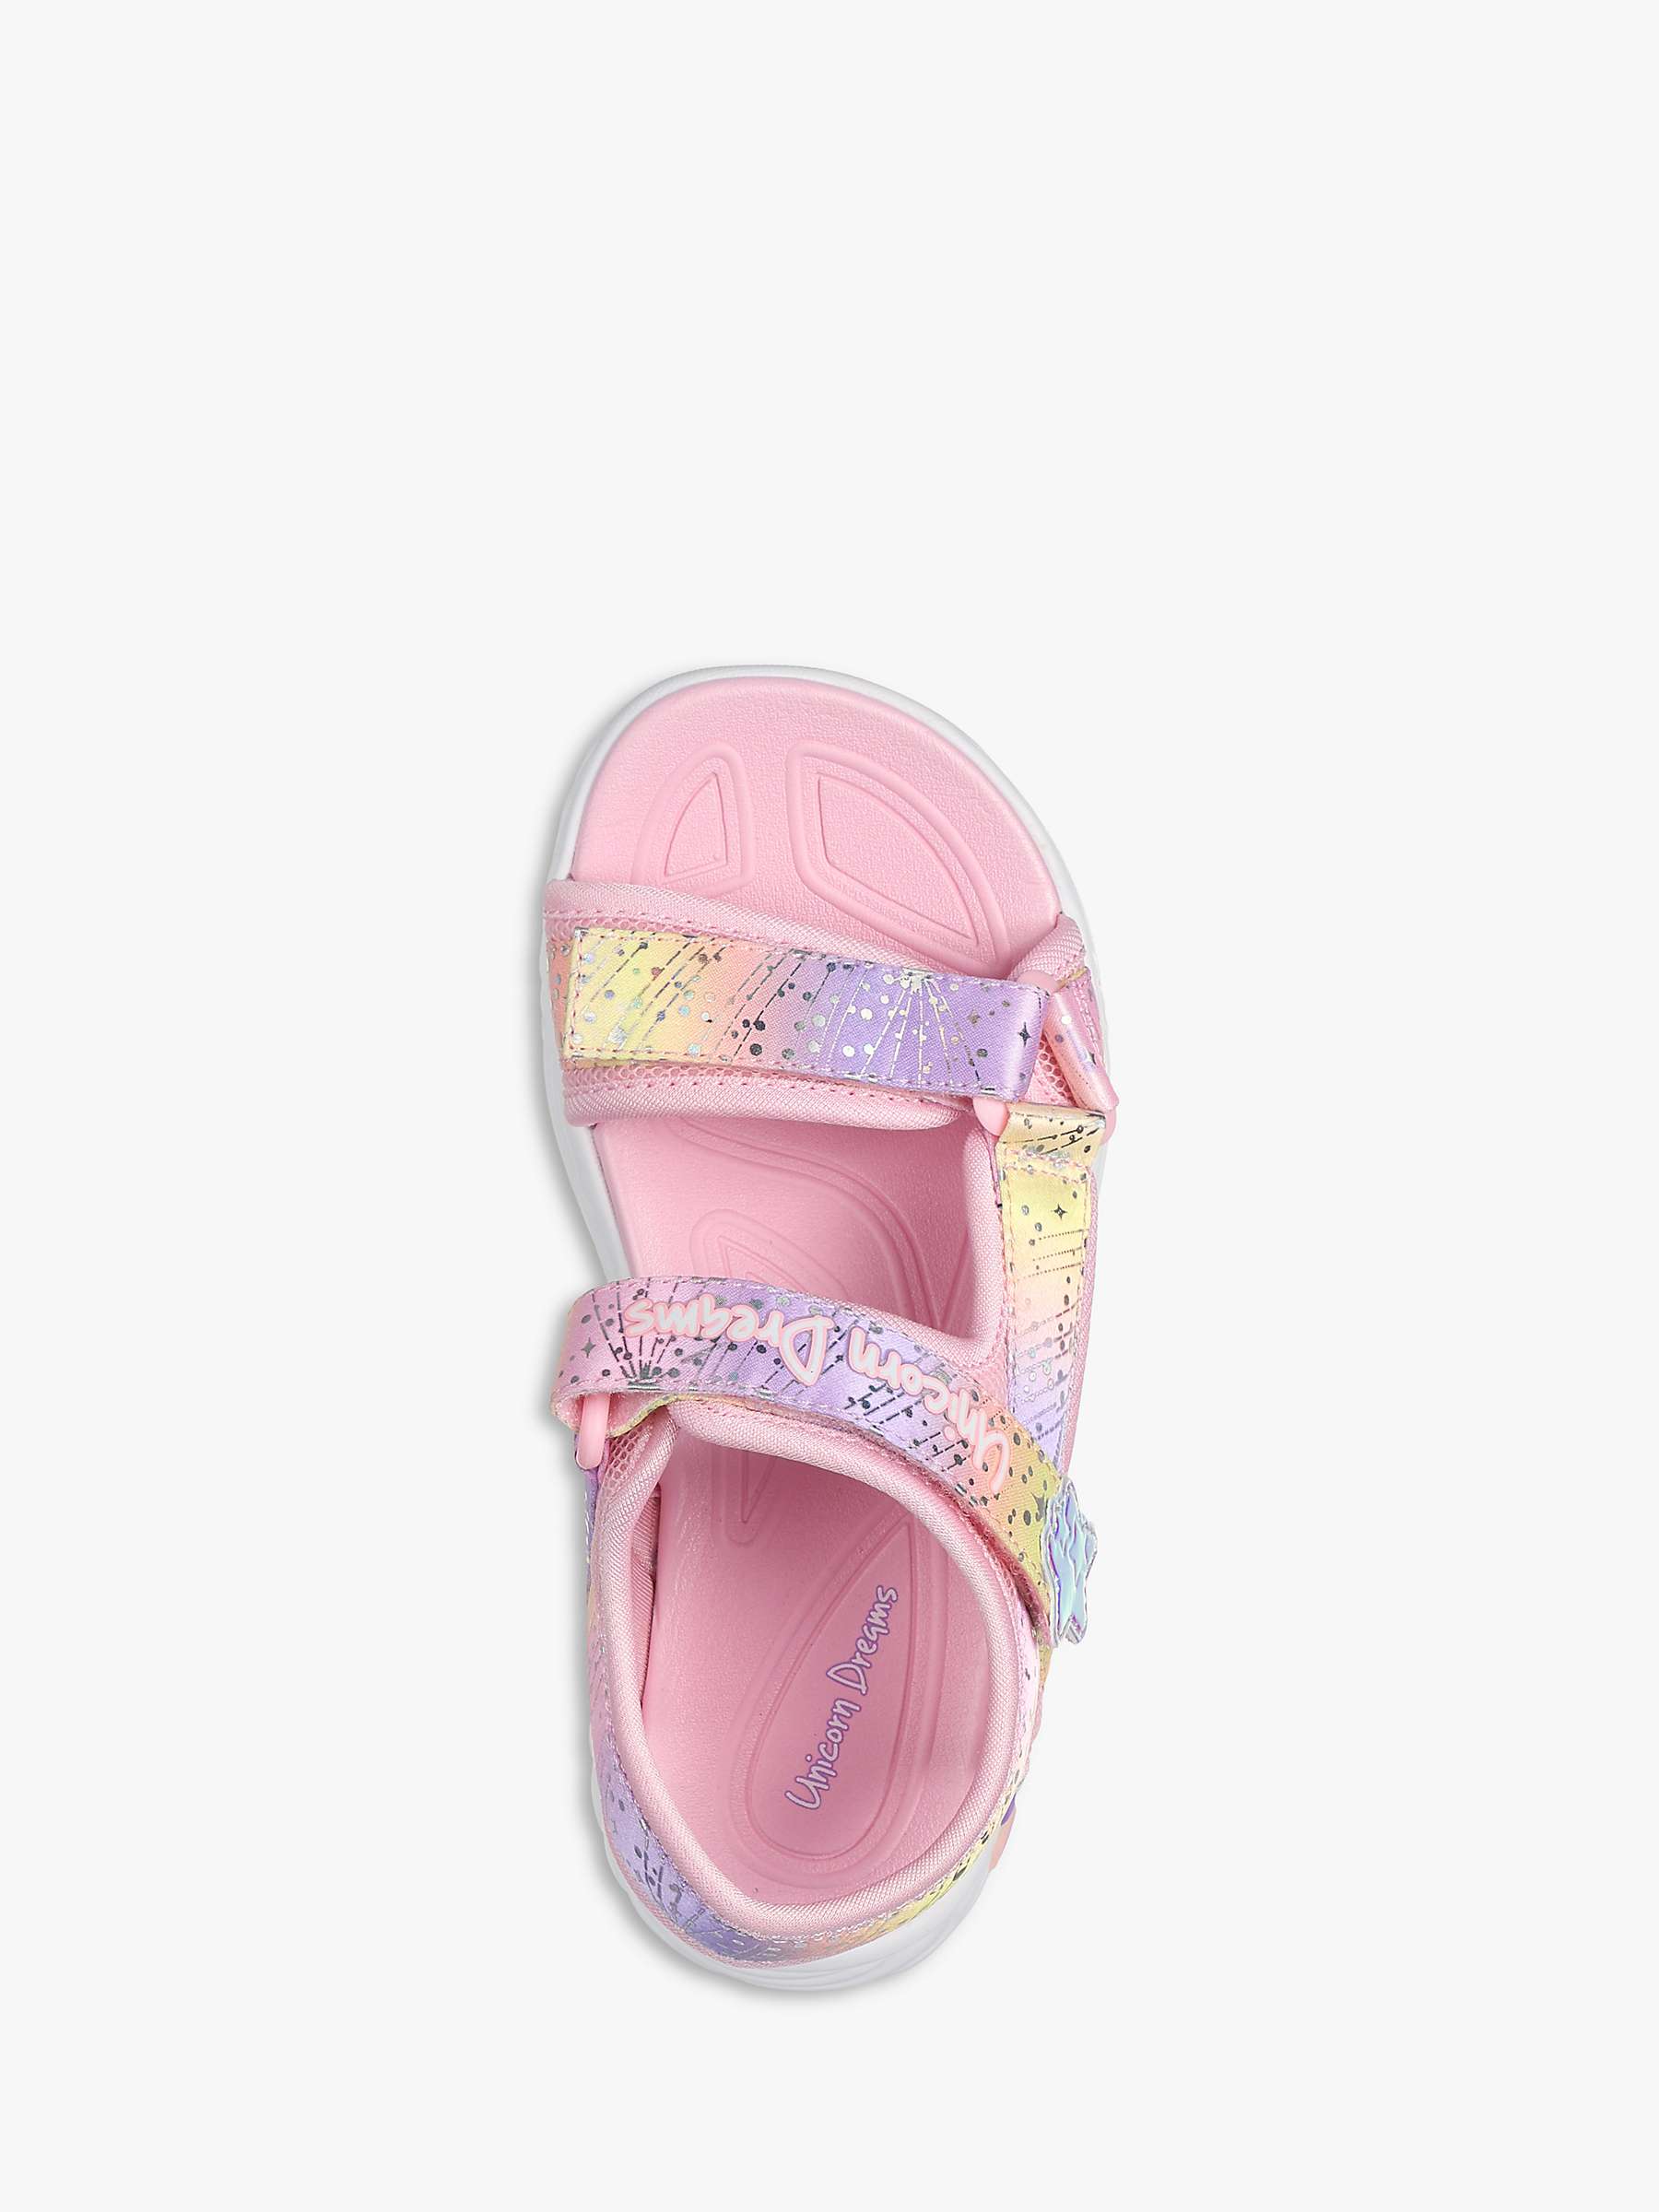 Buy Skechers Kids' S-Lights Unicorn Dreams Majestic Bliss Light Up Sandals, Pink/Multi Online at johnlewis.com